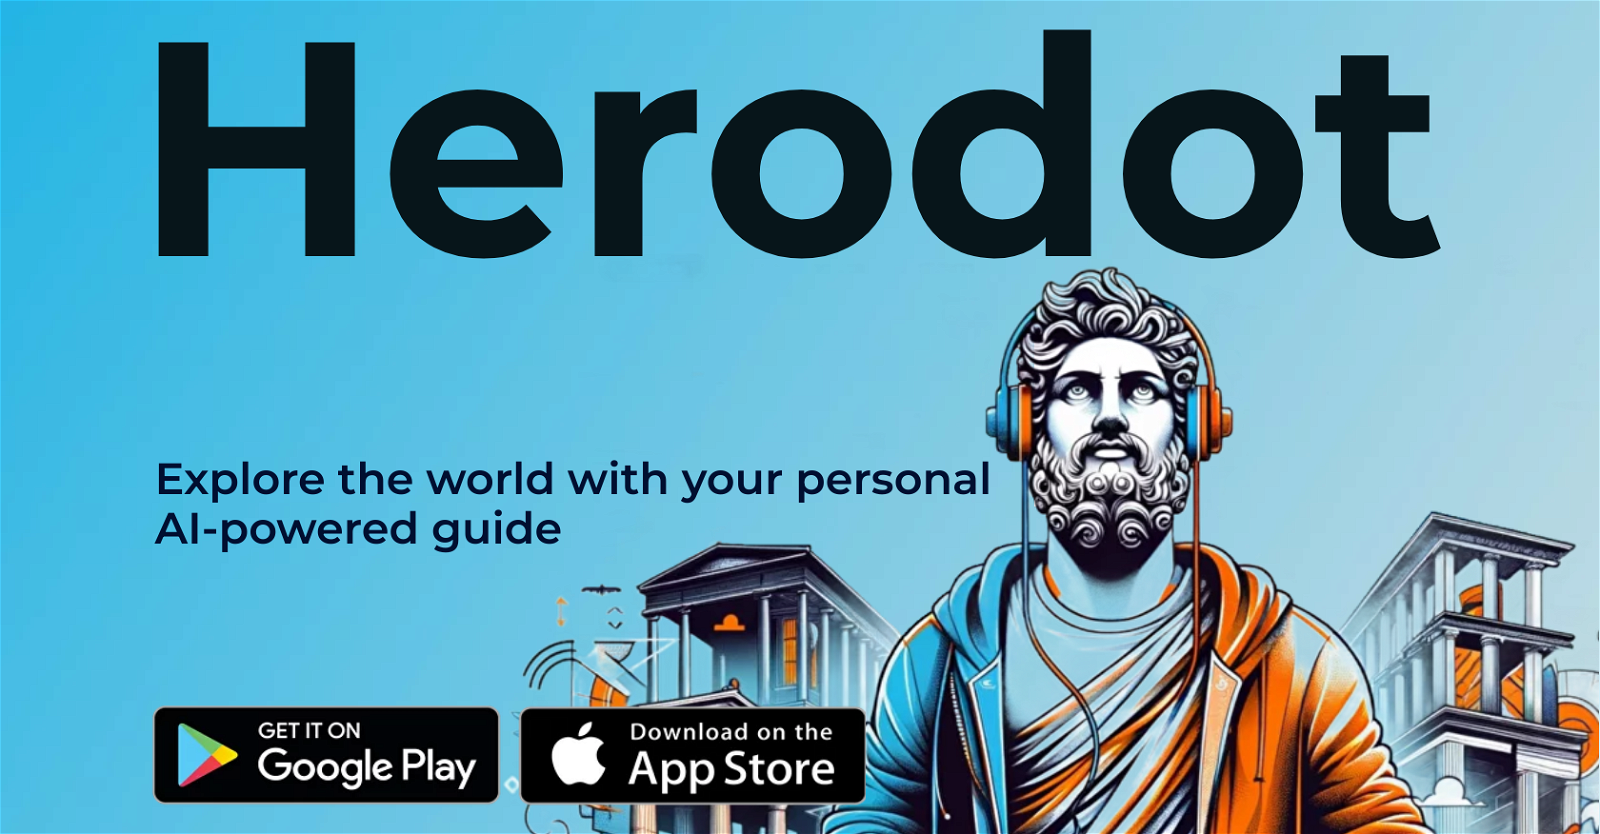 Herodot website